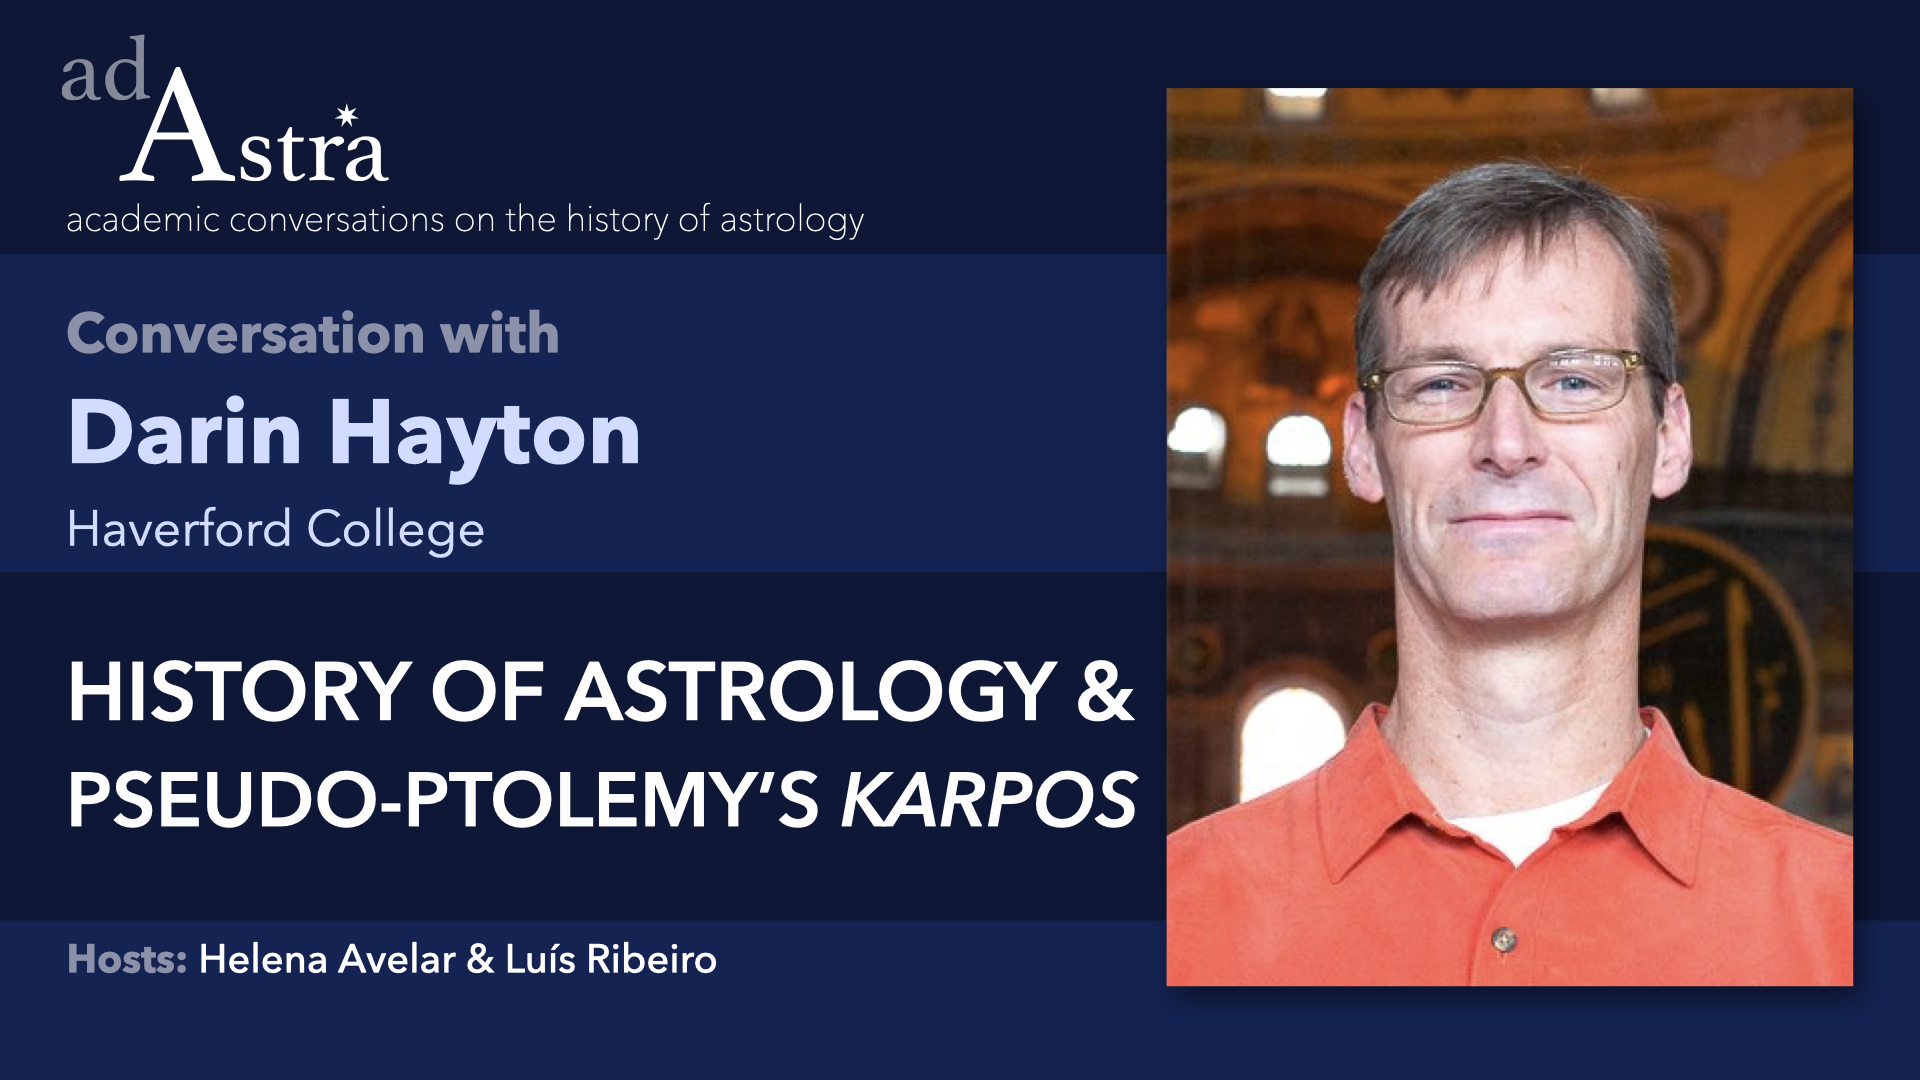 History of Astrology and Pseudo-Ptolemy's "Karpos" with Darin Hayton